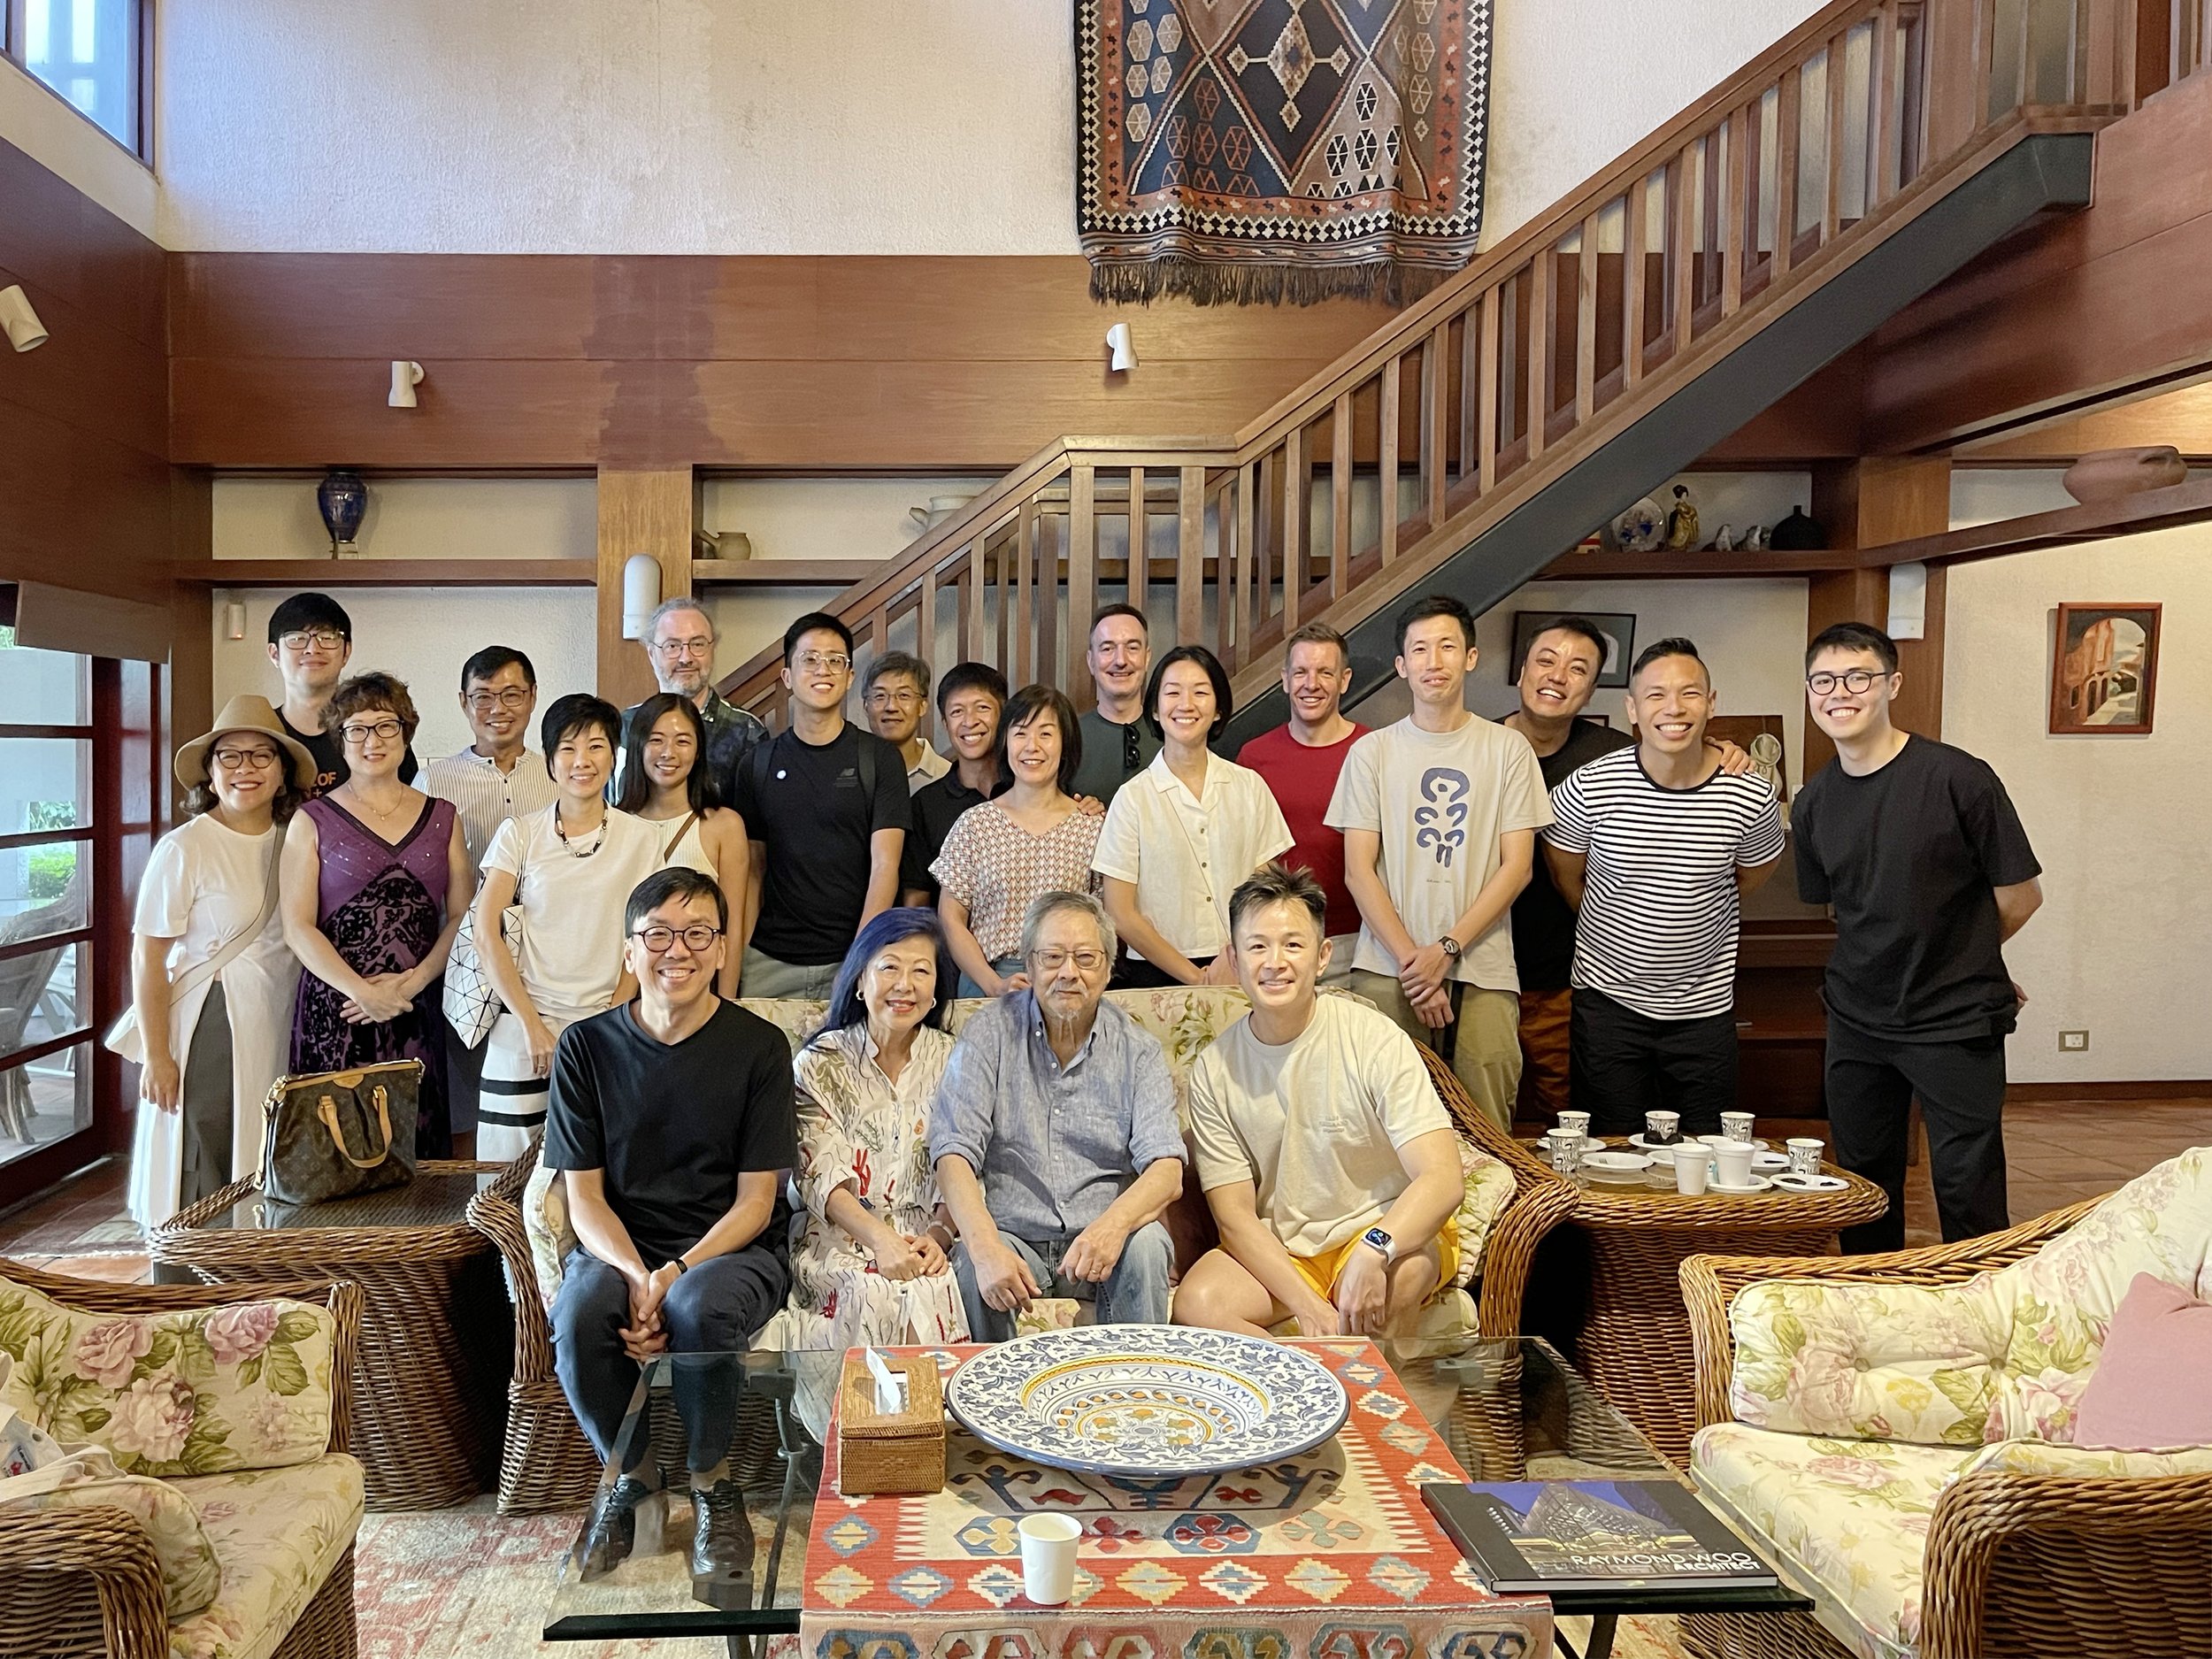 Tour participants by Dr. Chang Jiat Hwee